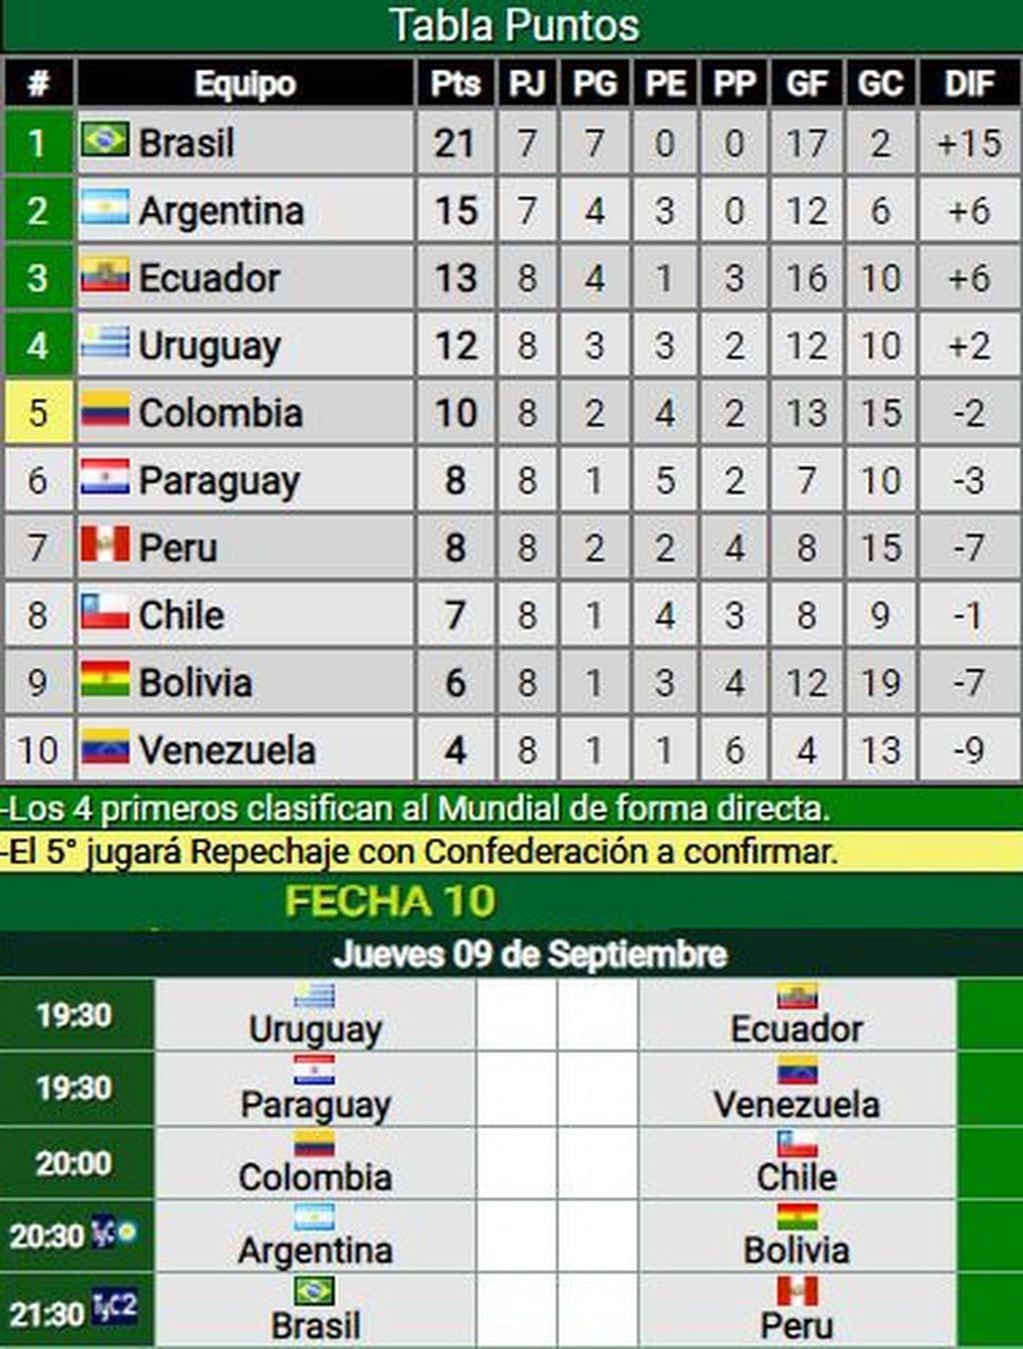 Eliminatorias Sudamericanas